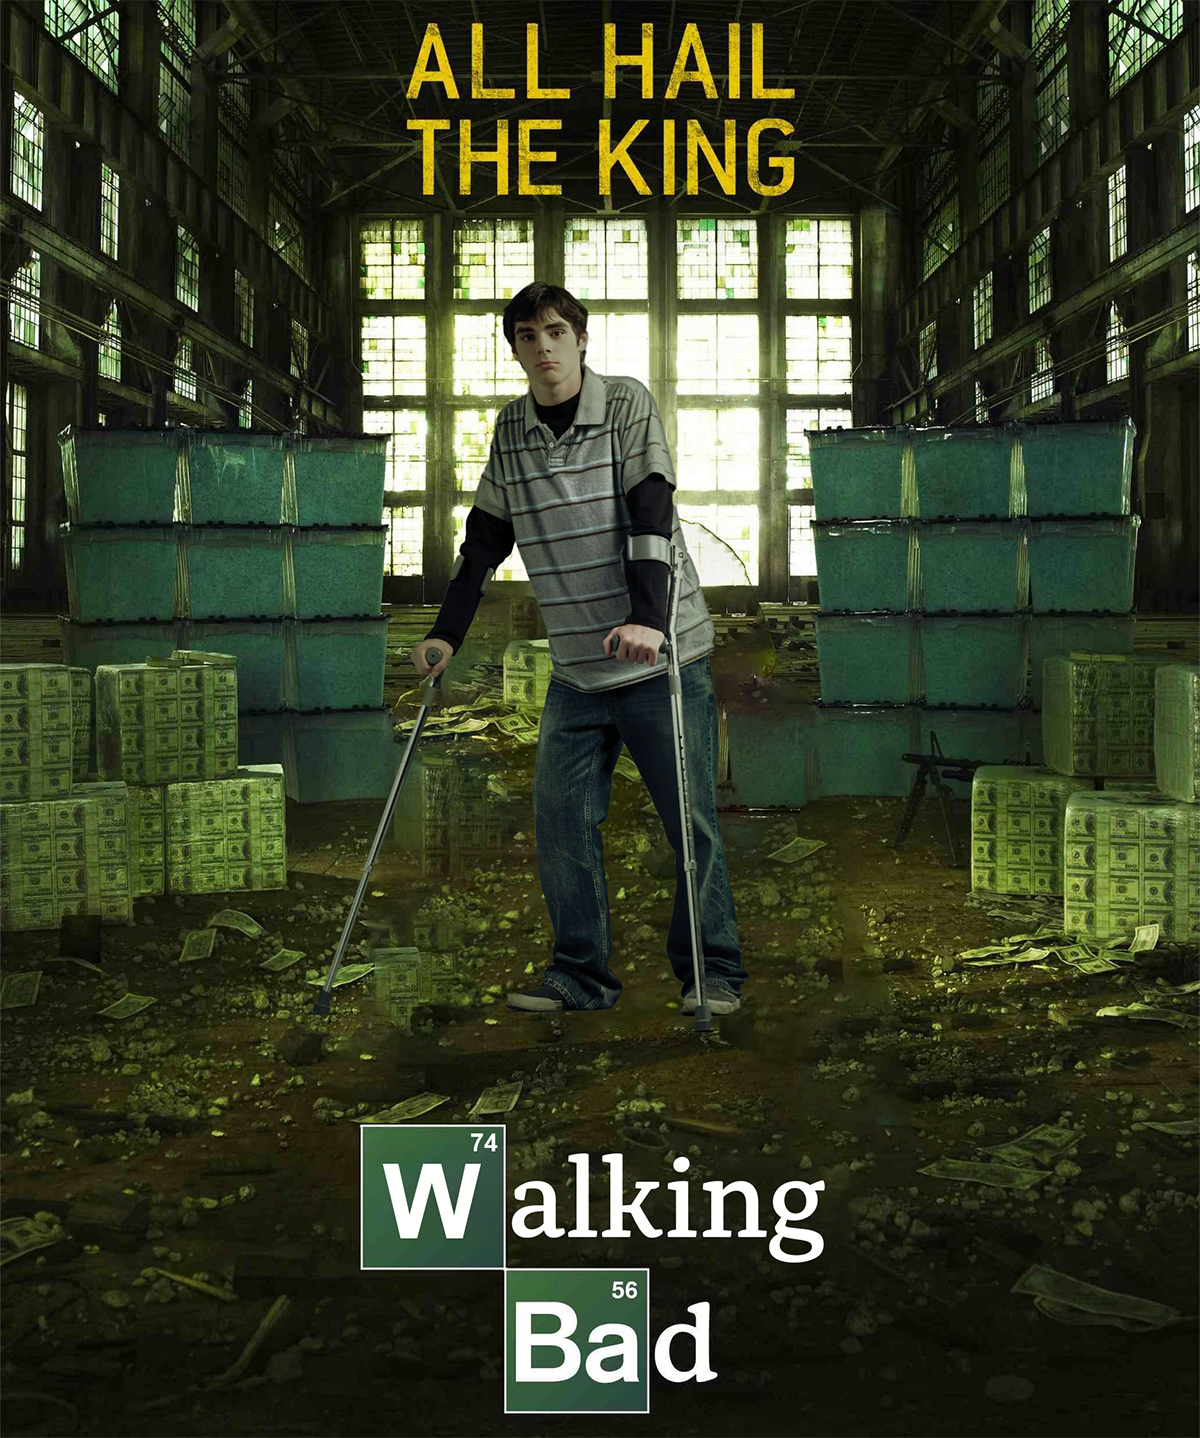 monday morning randomness - breaking bad season 5 art - All Hail The King 74 Walking 56 Bad